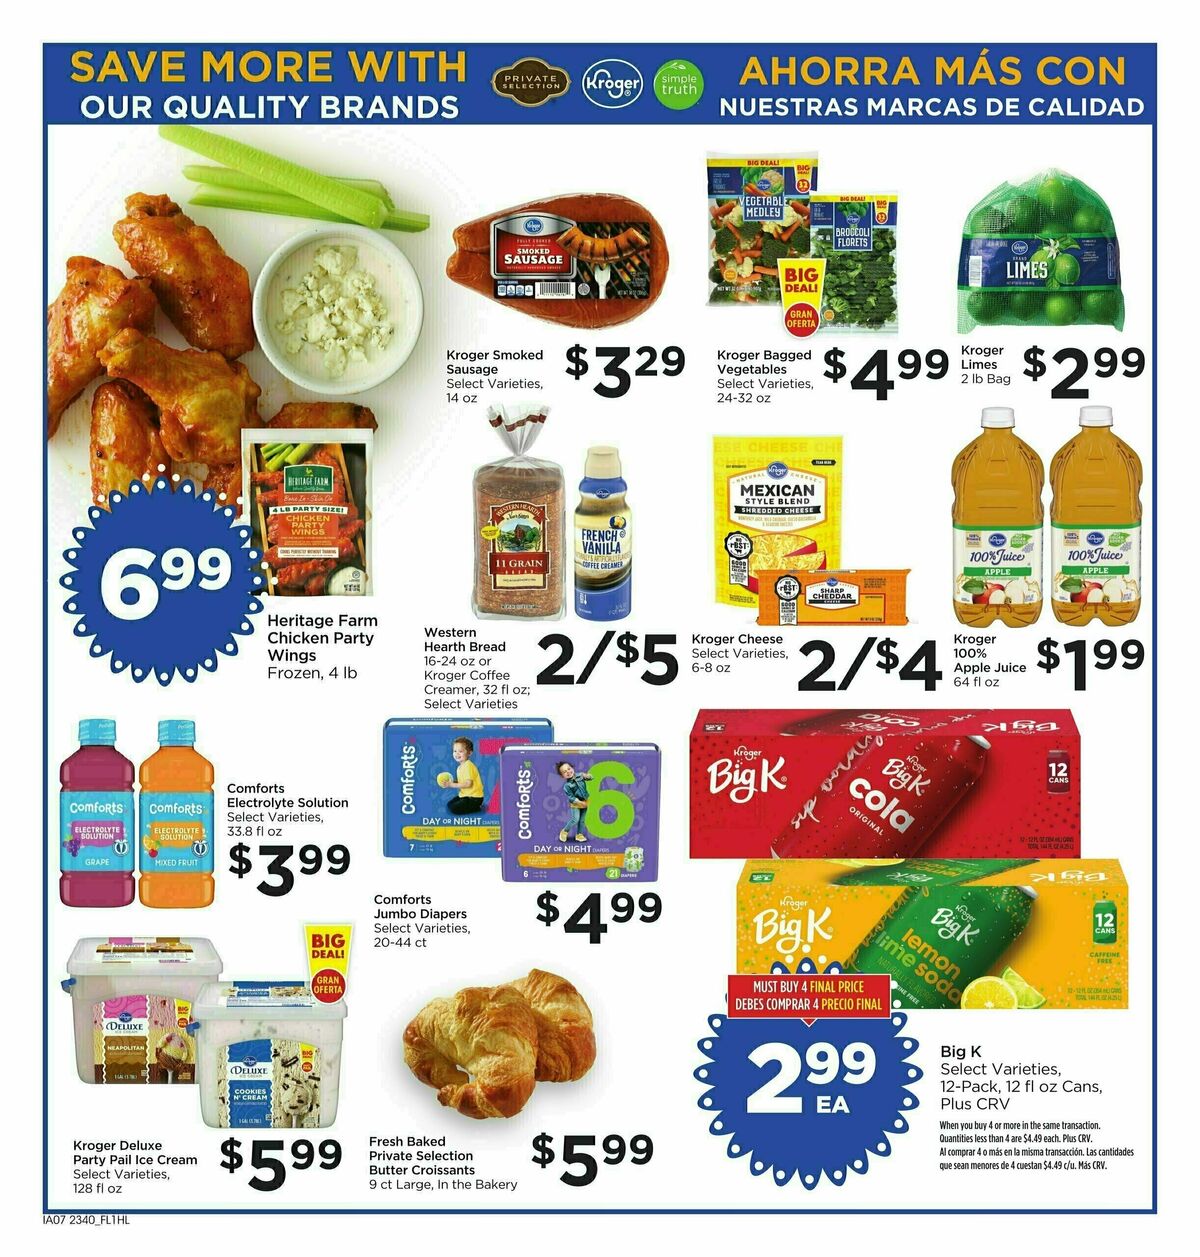 Food 4 Less Weekly Ad from November 1